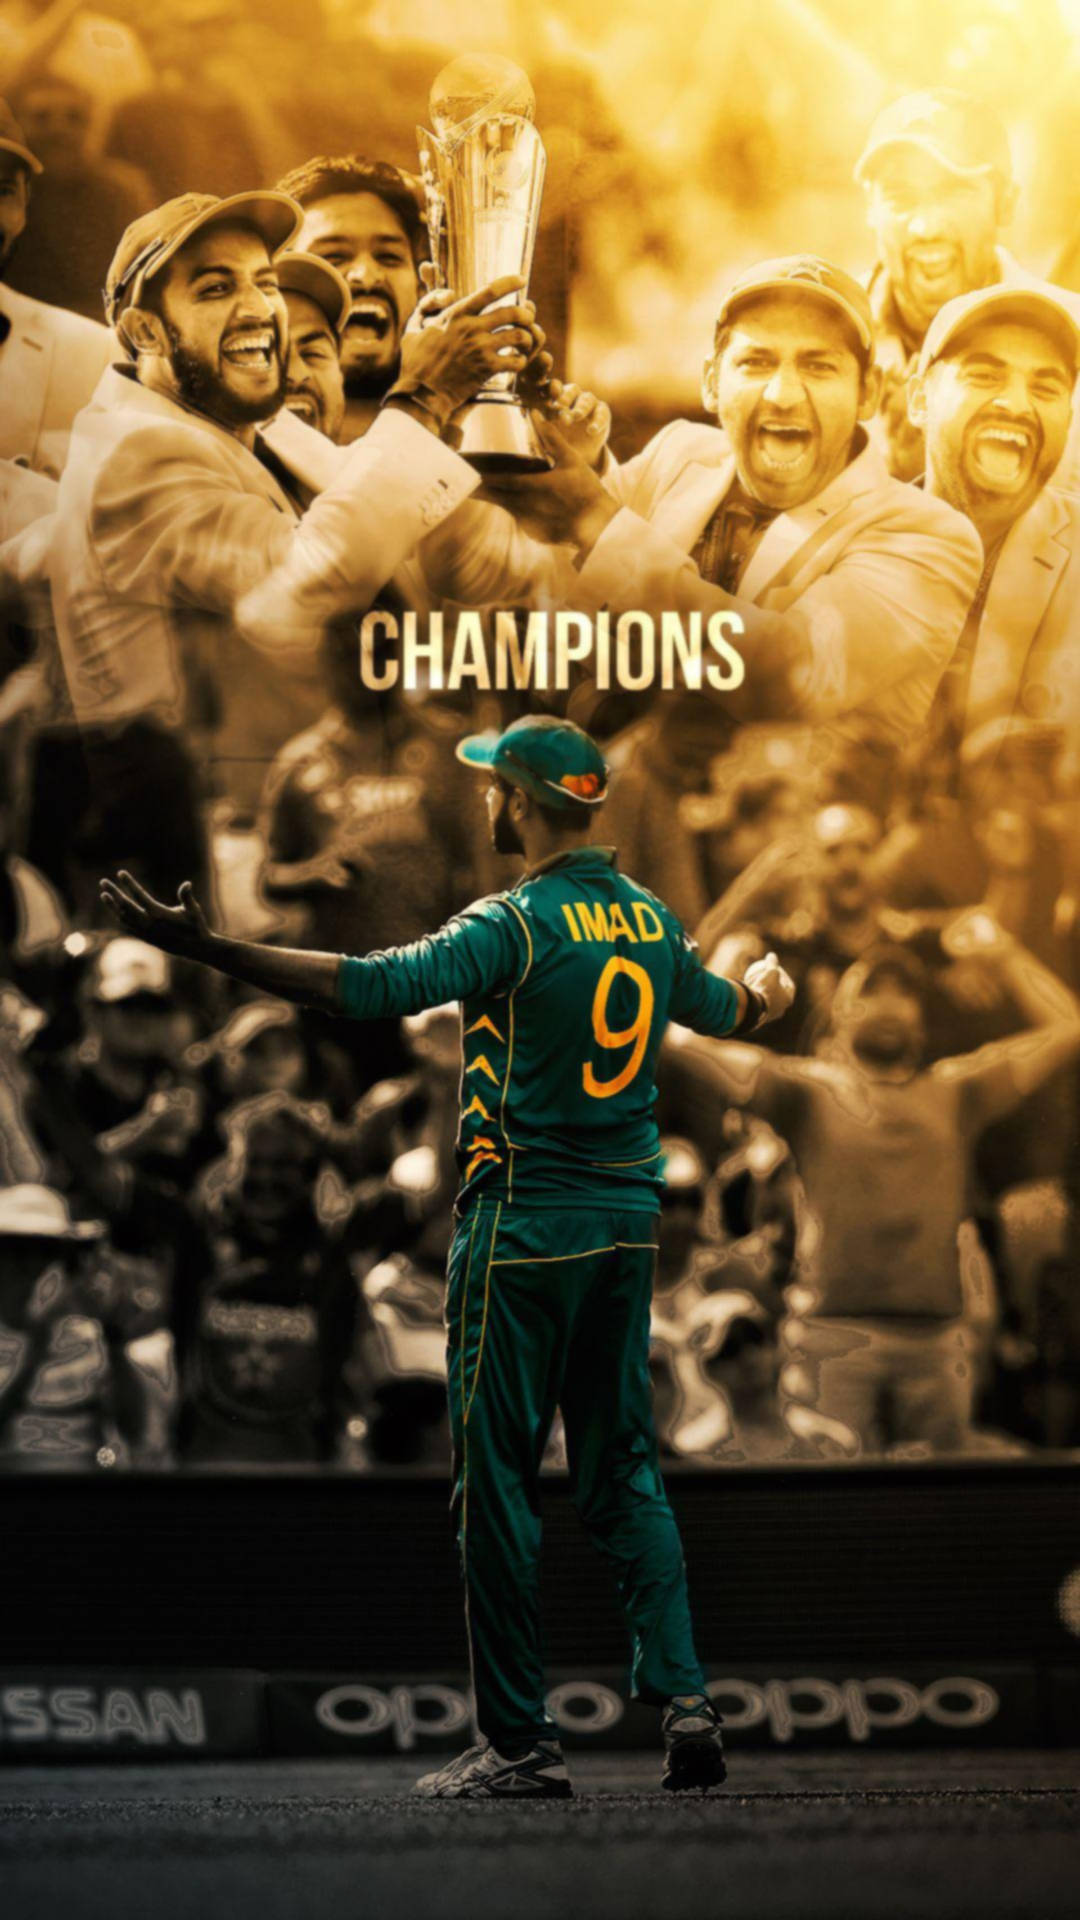 Pakistancricket 2017 Icc Champions - Pakistan Cricket 2017 Icc Champions. Wallpaper